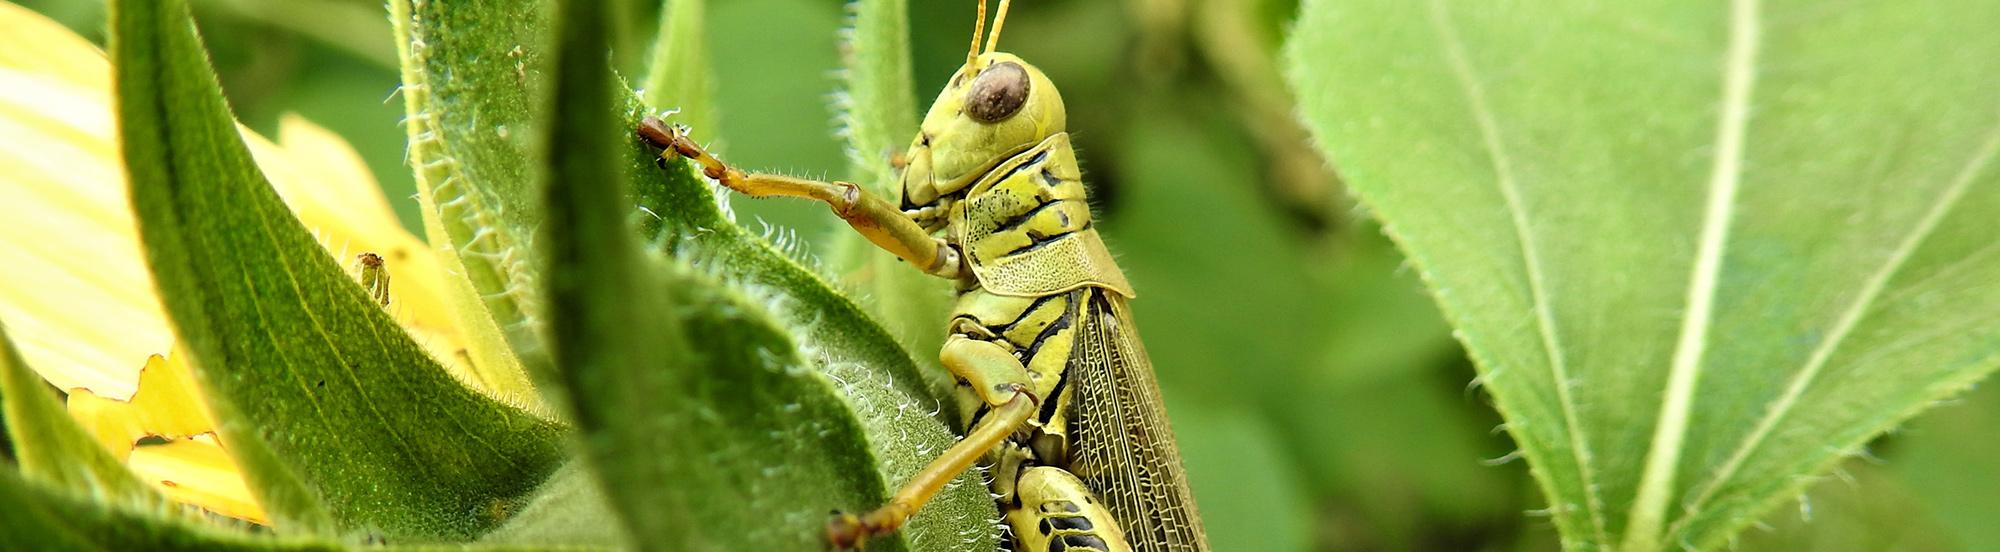 grasshopper in omaha nebraska